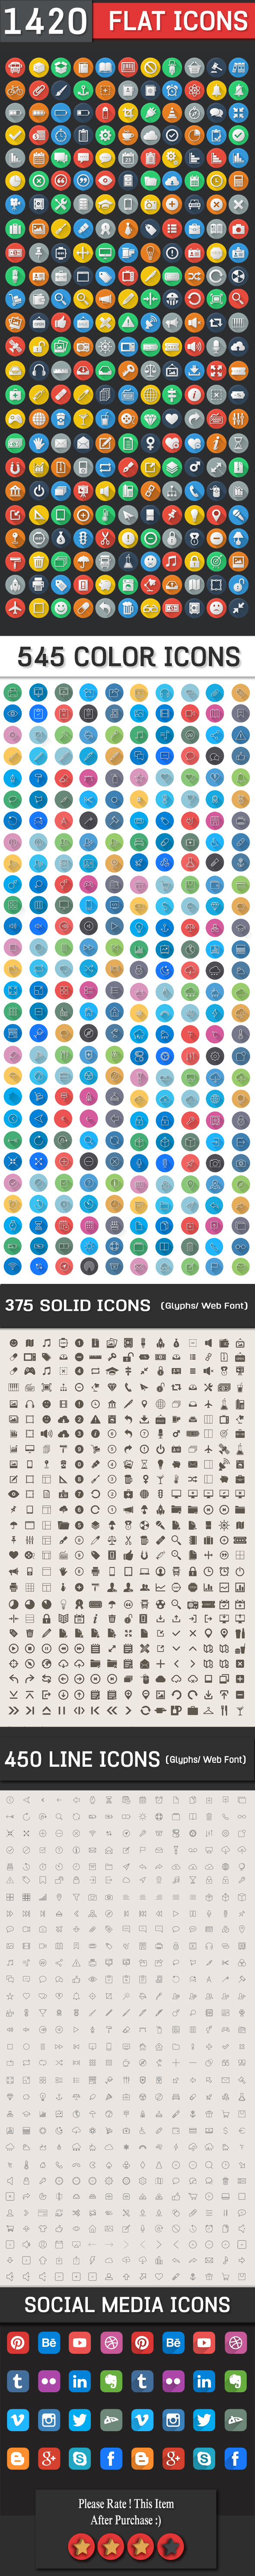 1420 Flat Icons - Colorful Icon Set | FlatLineIcons.com